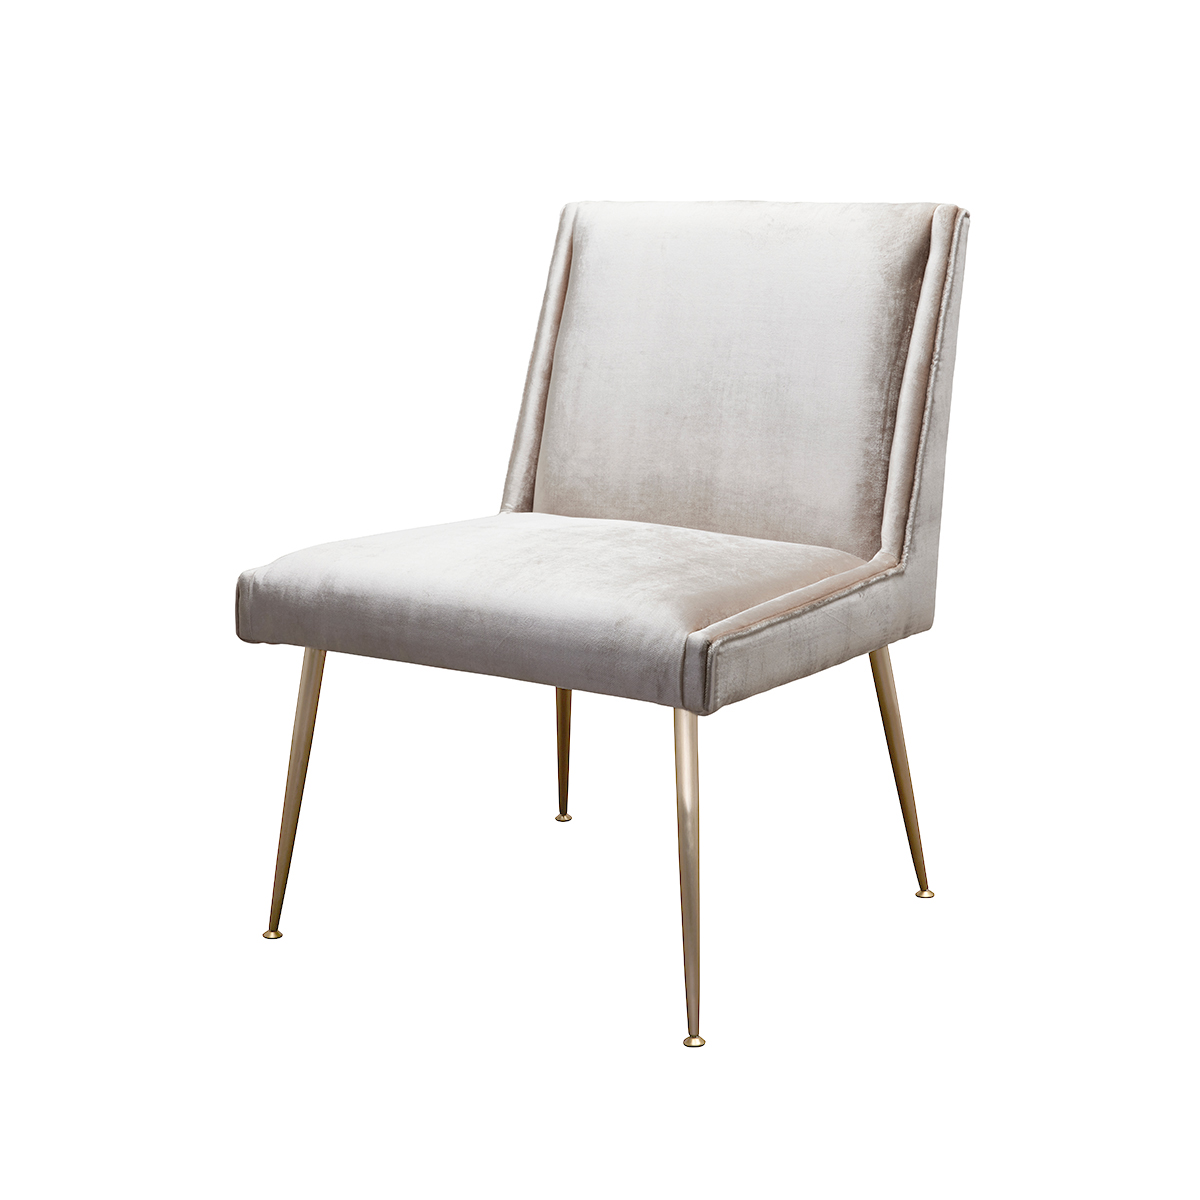 Art Lounge Chair – Oatmeal